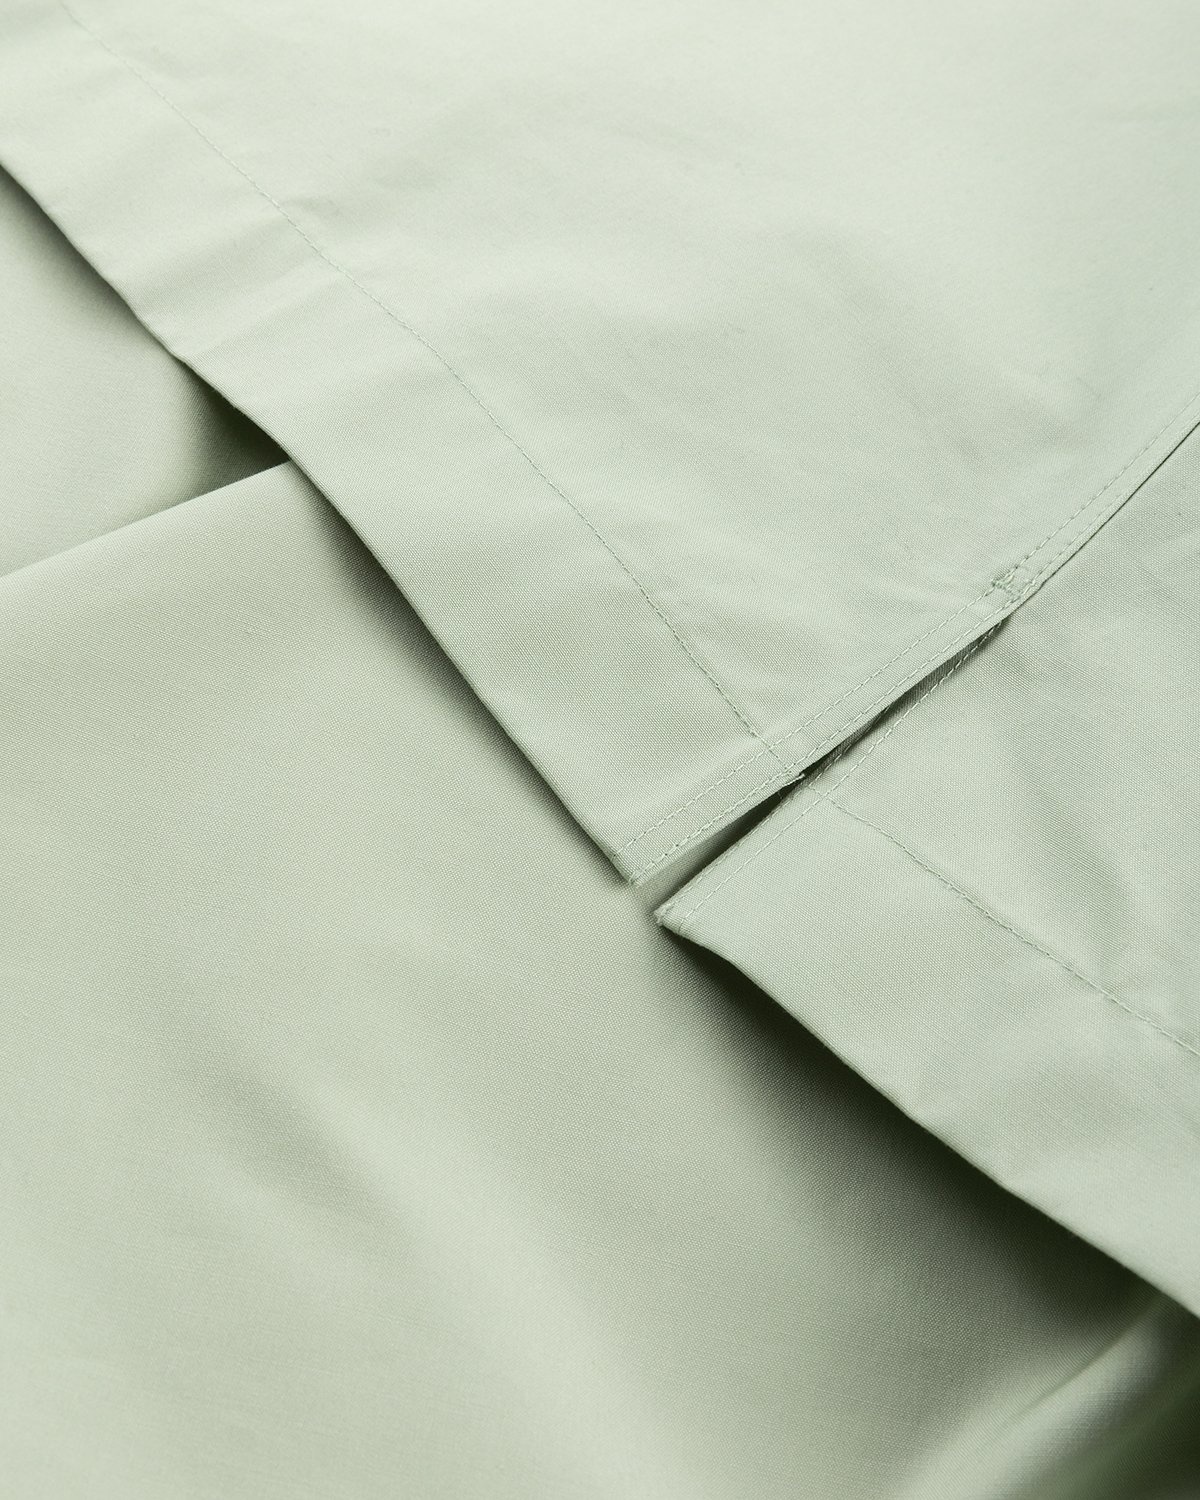 Jil Sander – Two-Tone Diagonal Cut Shirt Black/Green - Shirts - Green - Image 4